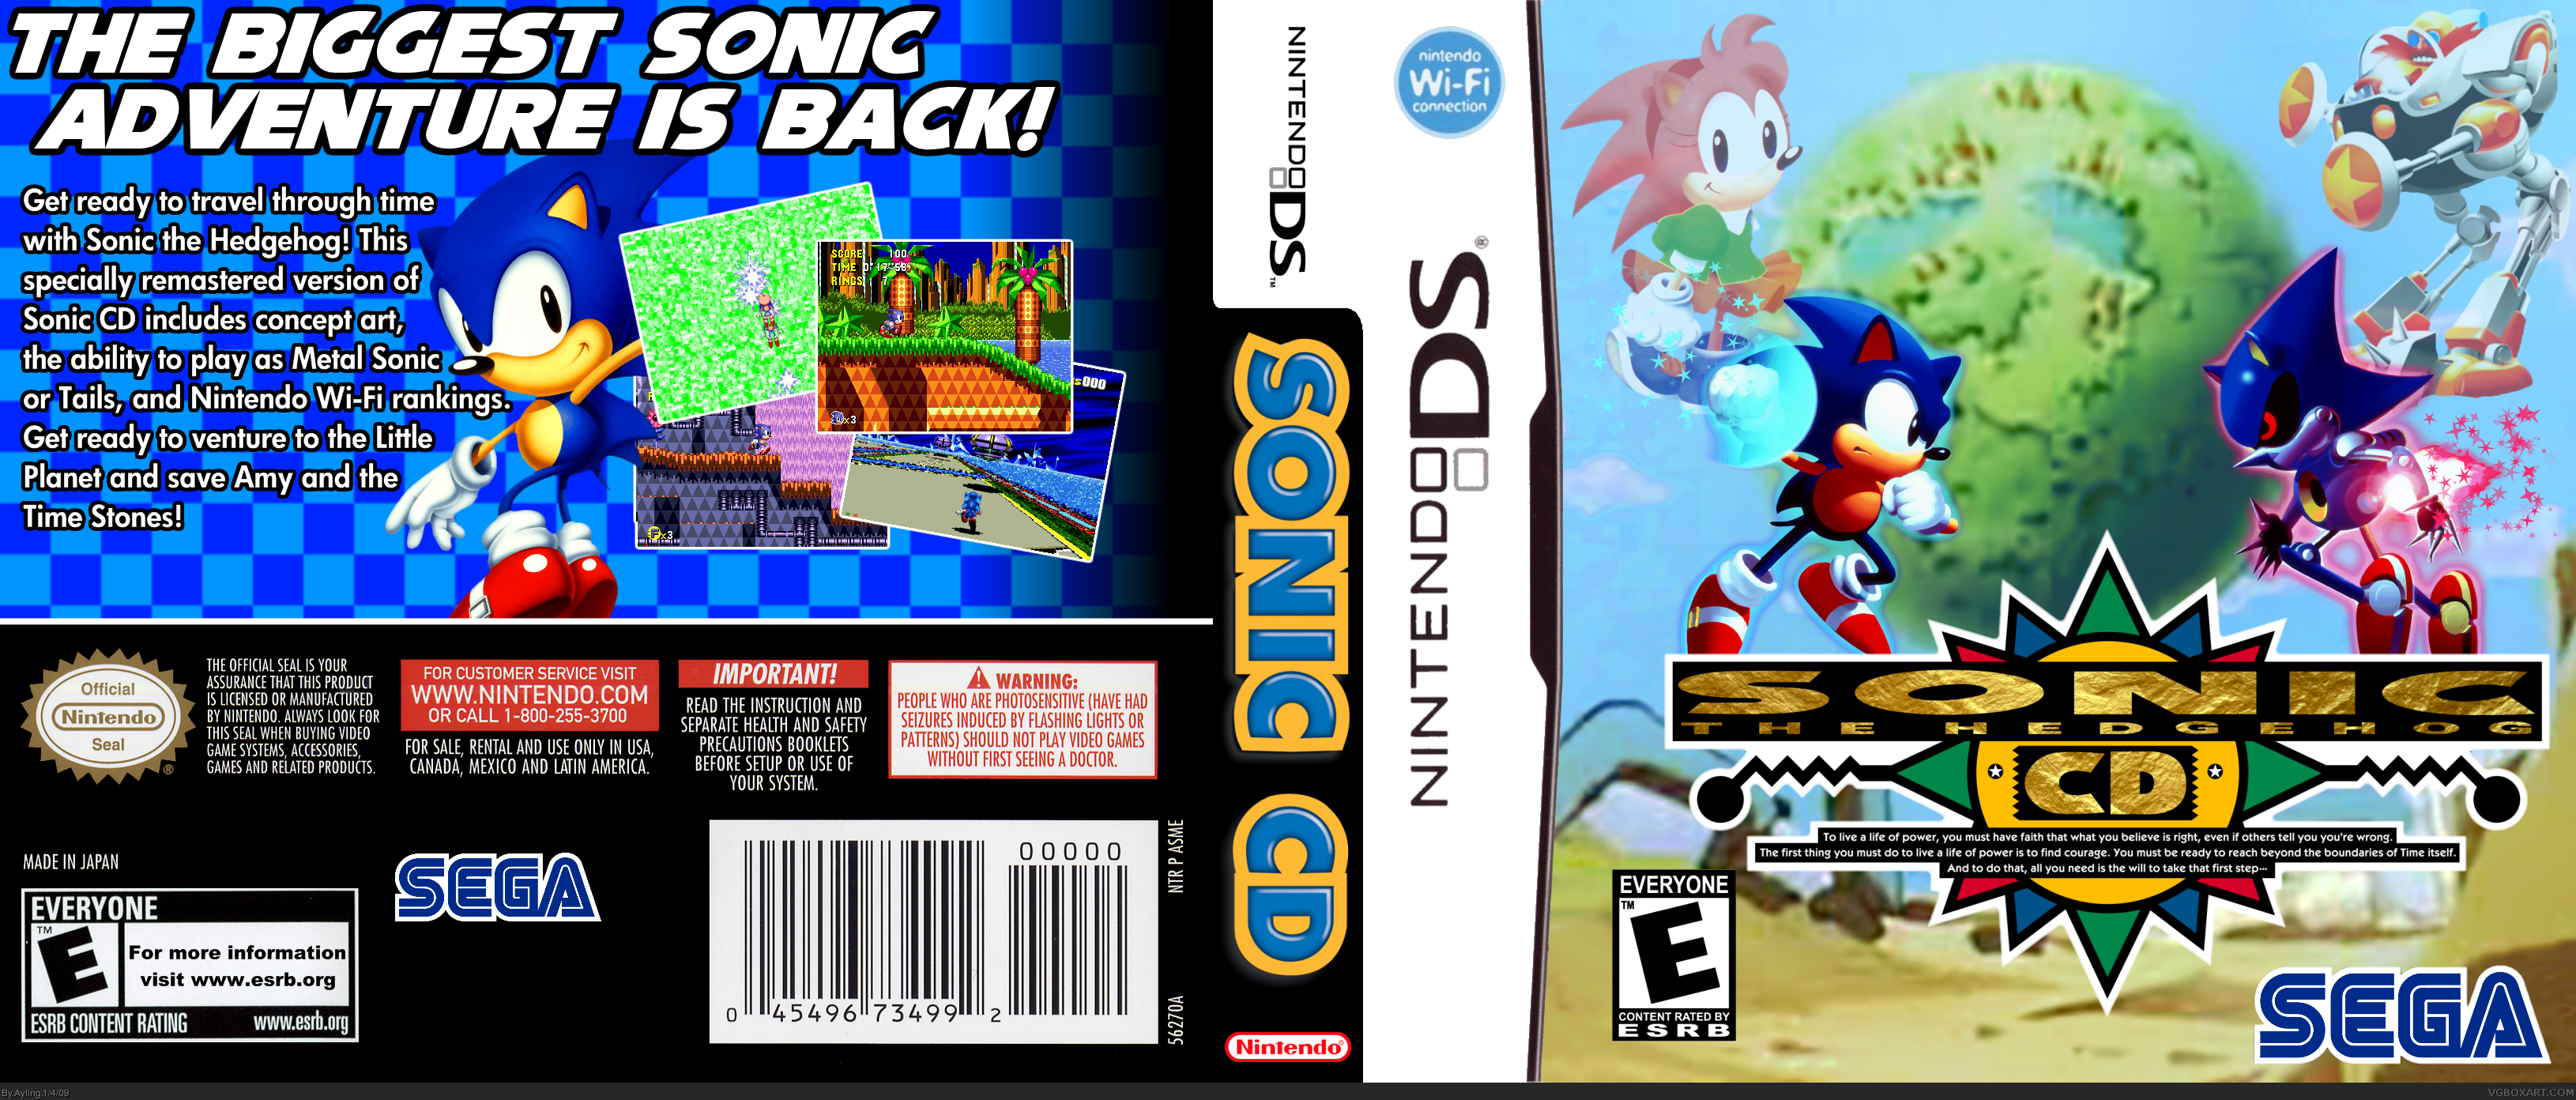 Sonic CD box cover